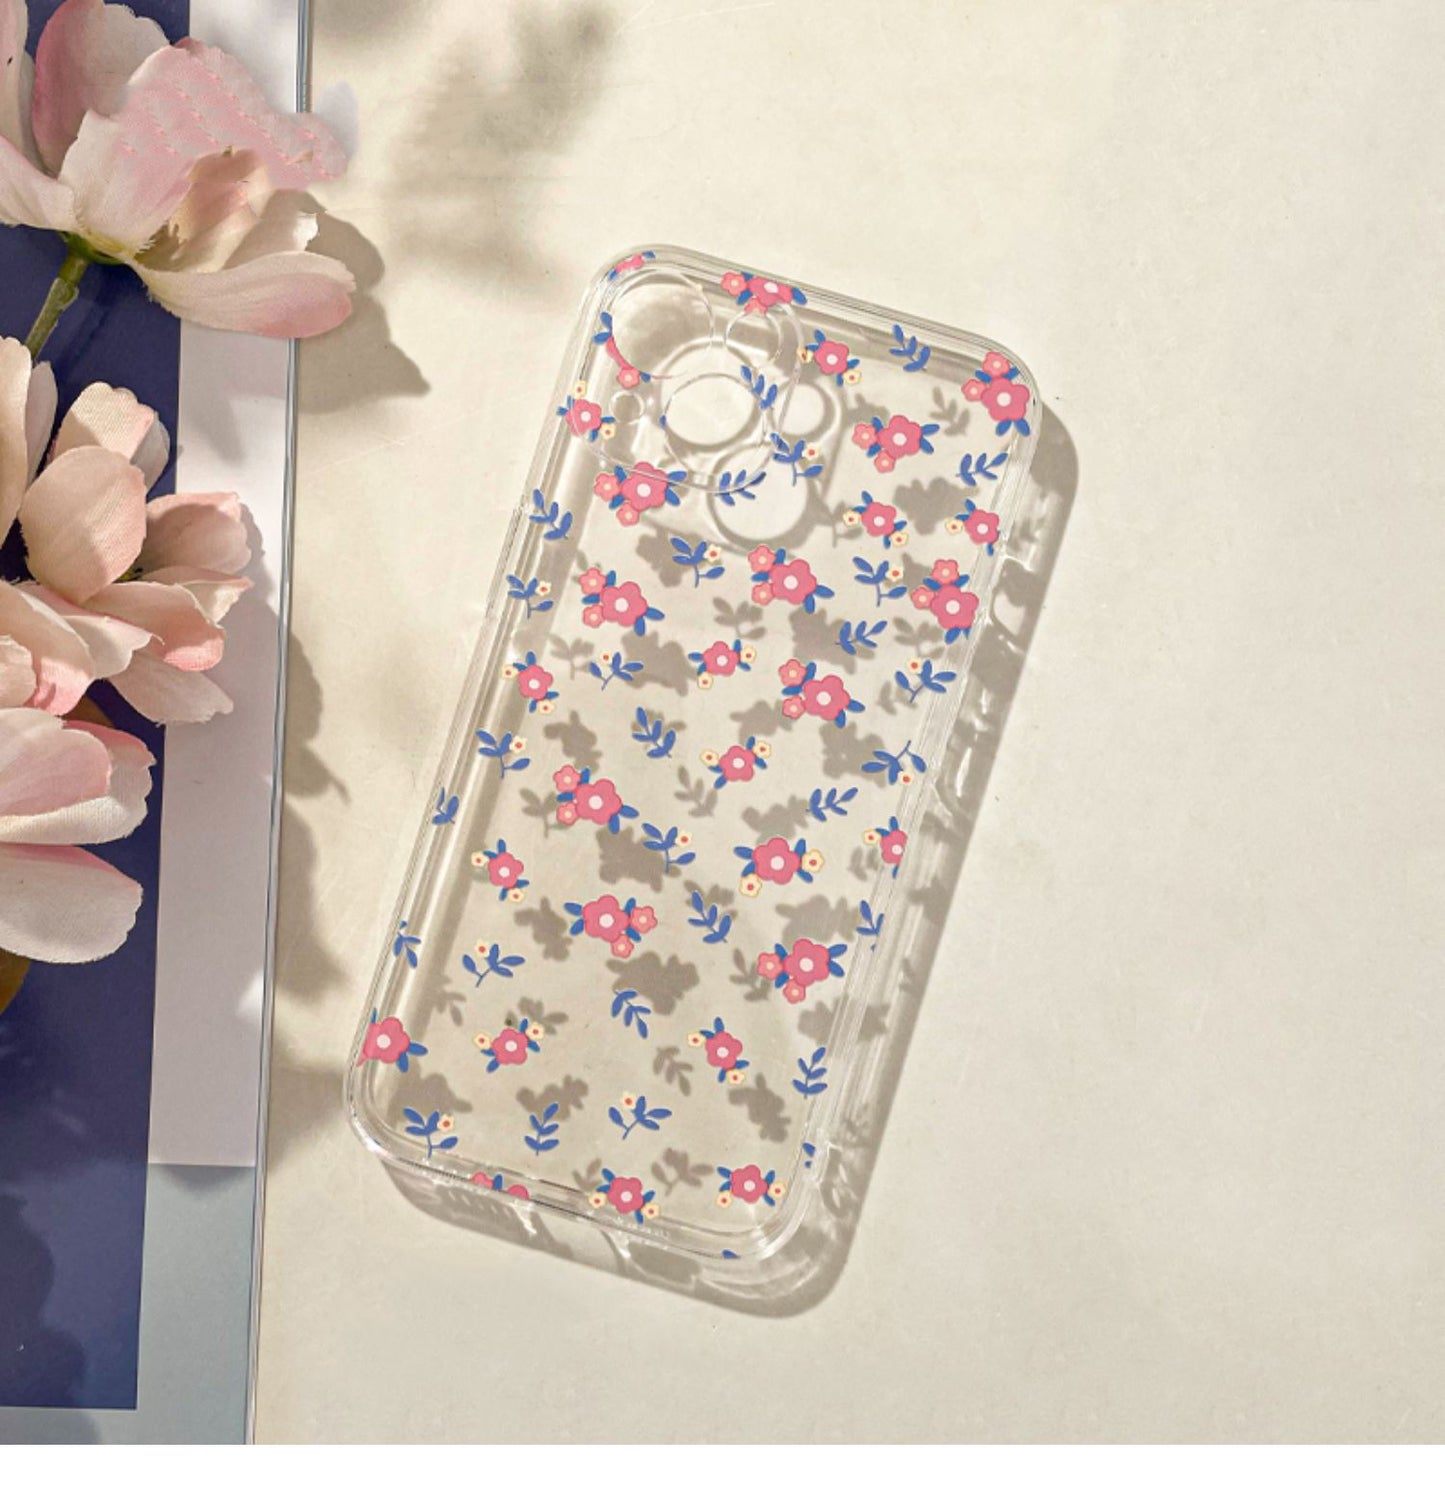 Little Pink Flower Floral Mori iPhone Case 6 7 8 PLUS SE2 XS XR X 11 12 13 14 15 Pro Promax 12mini 13mini